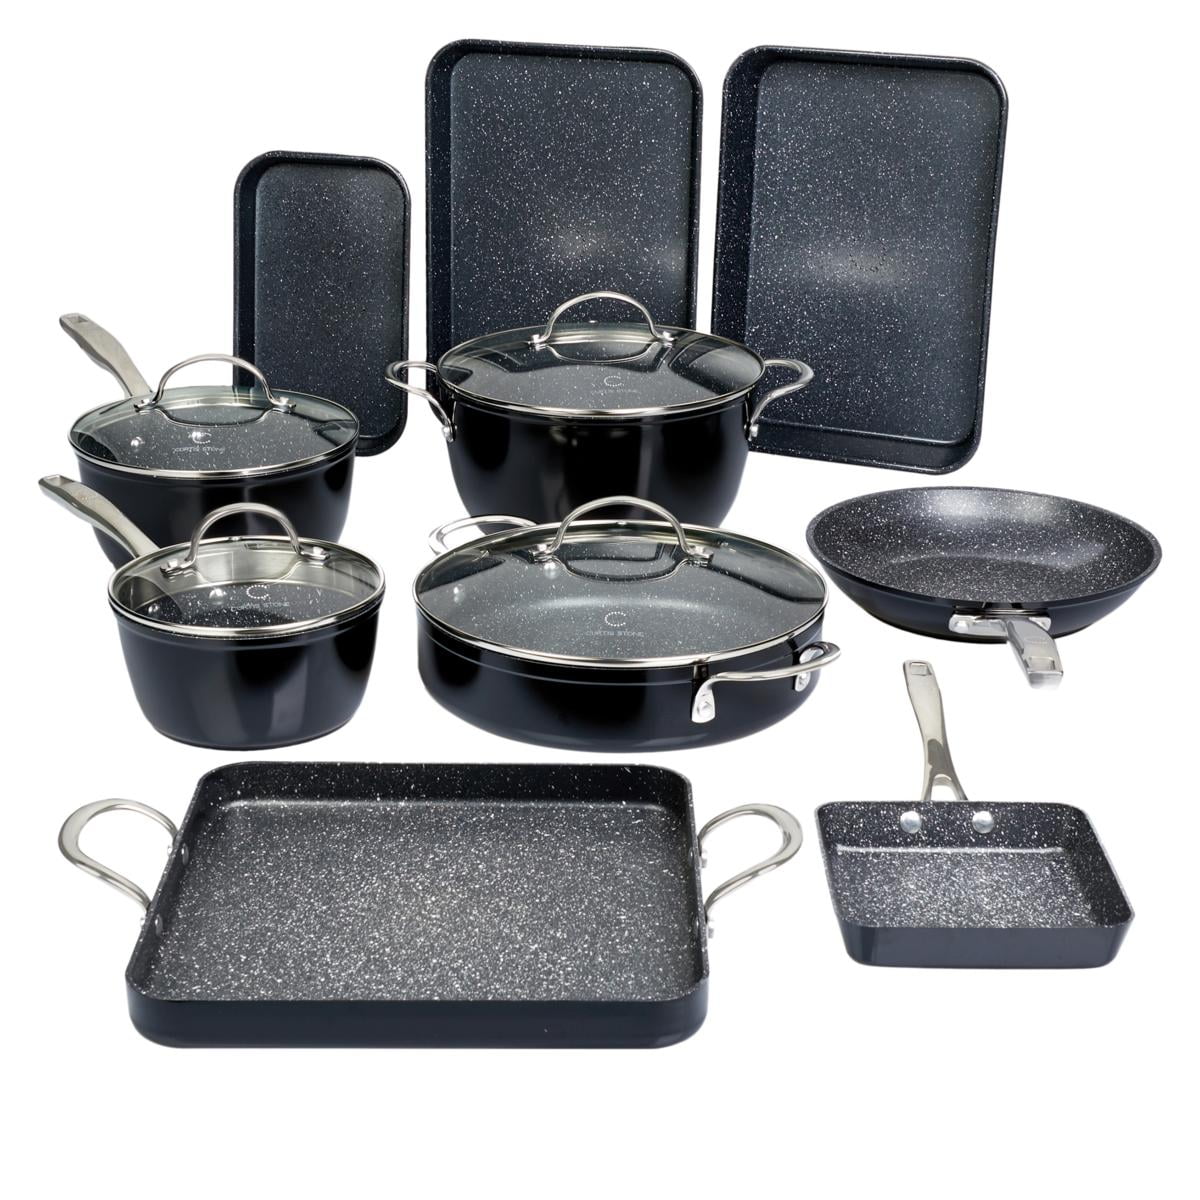 Curtis Stone Dura-Pan 11-piece Cookware Set Model 689-207 